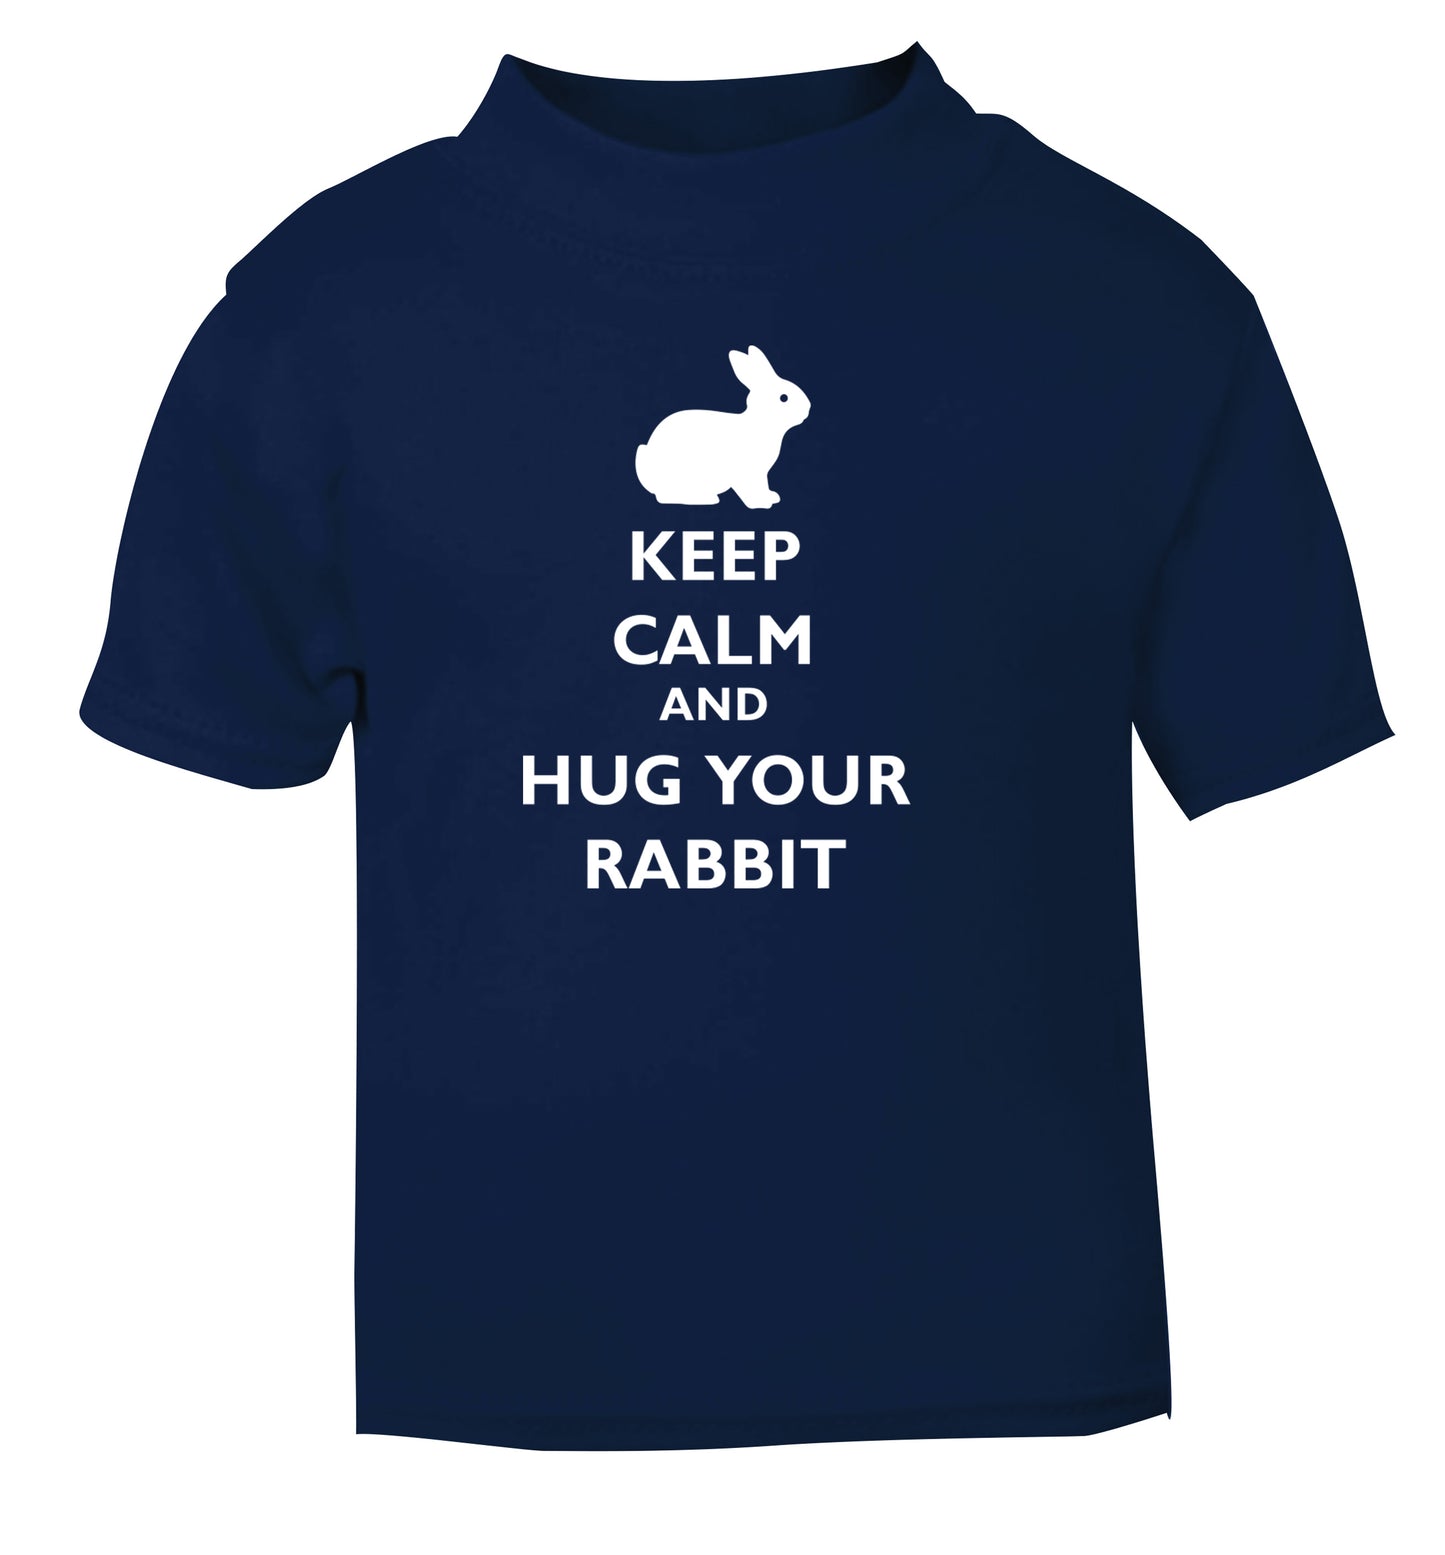 Keep calm and hug your rabbit navy Baby Toddler Tshirt 2 Years